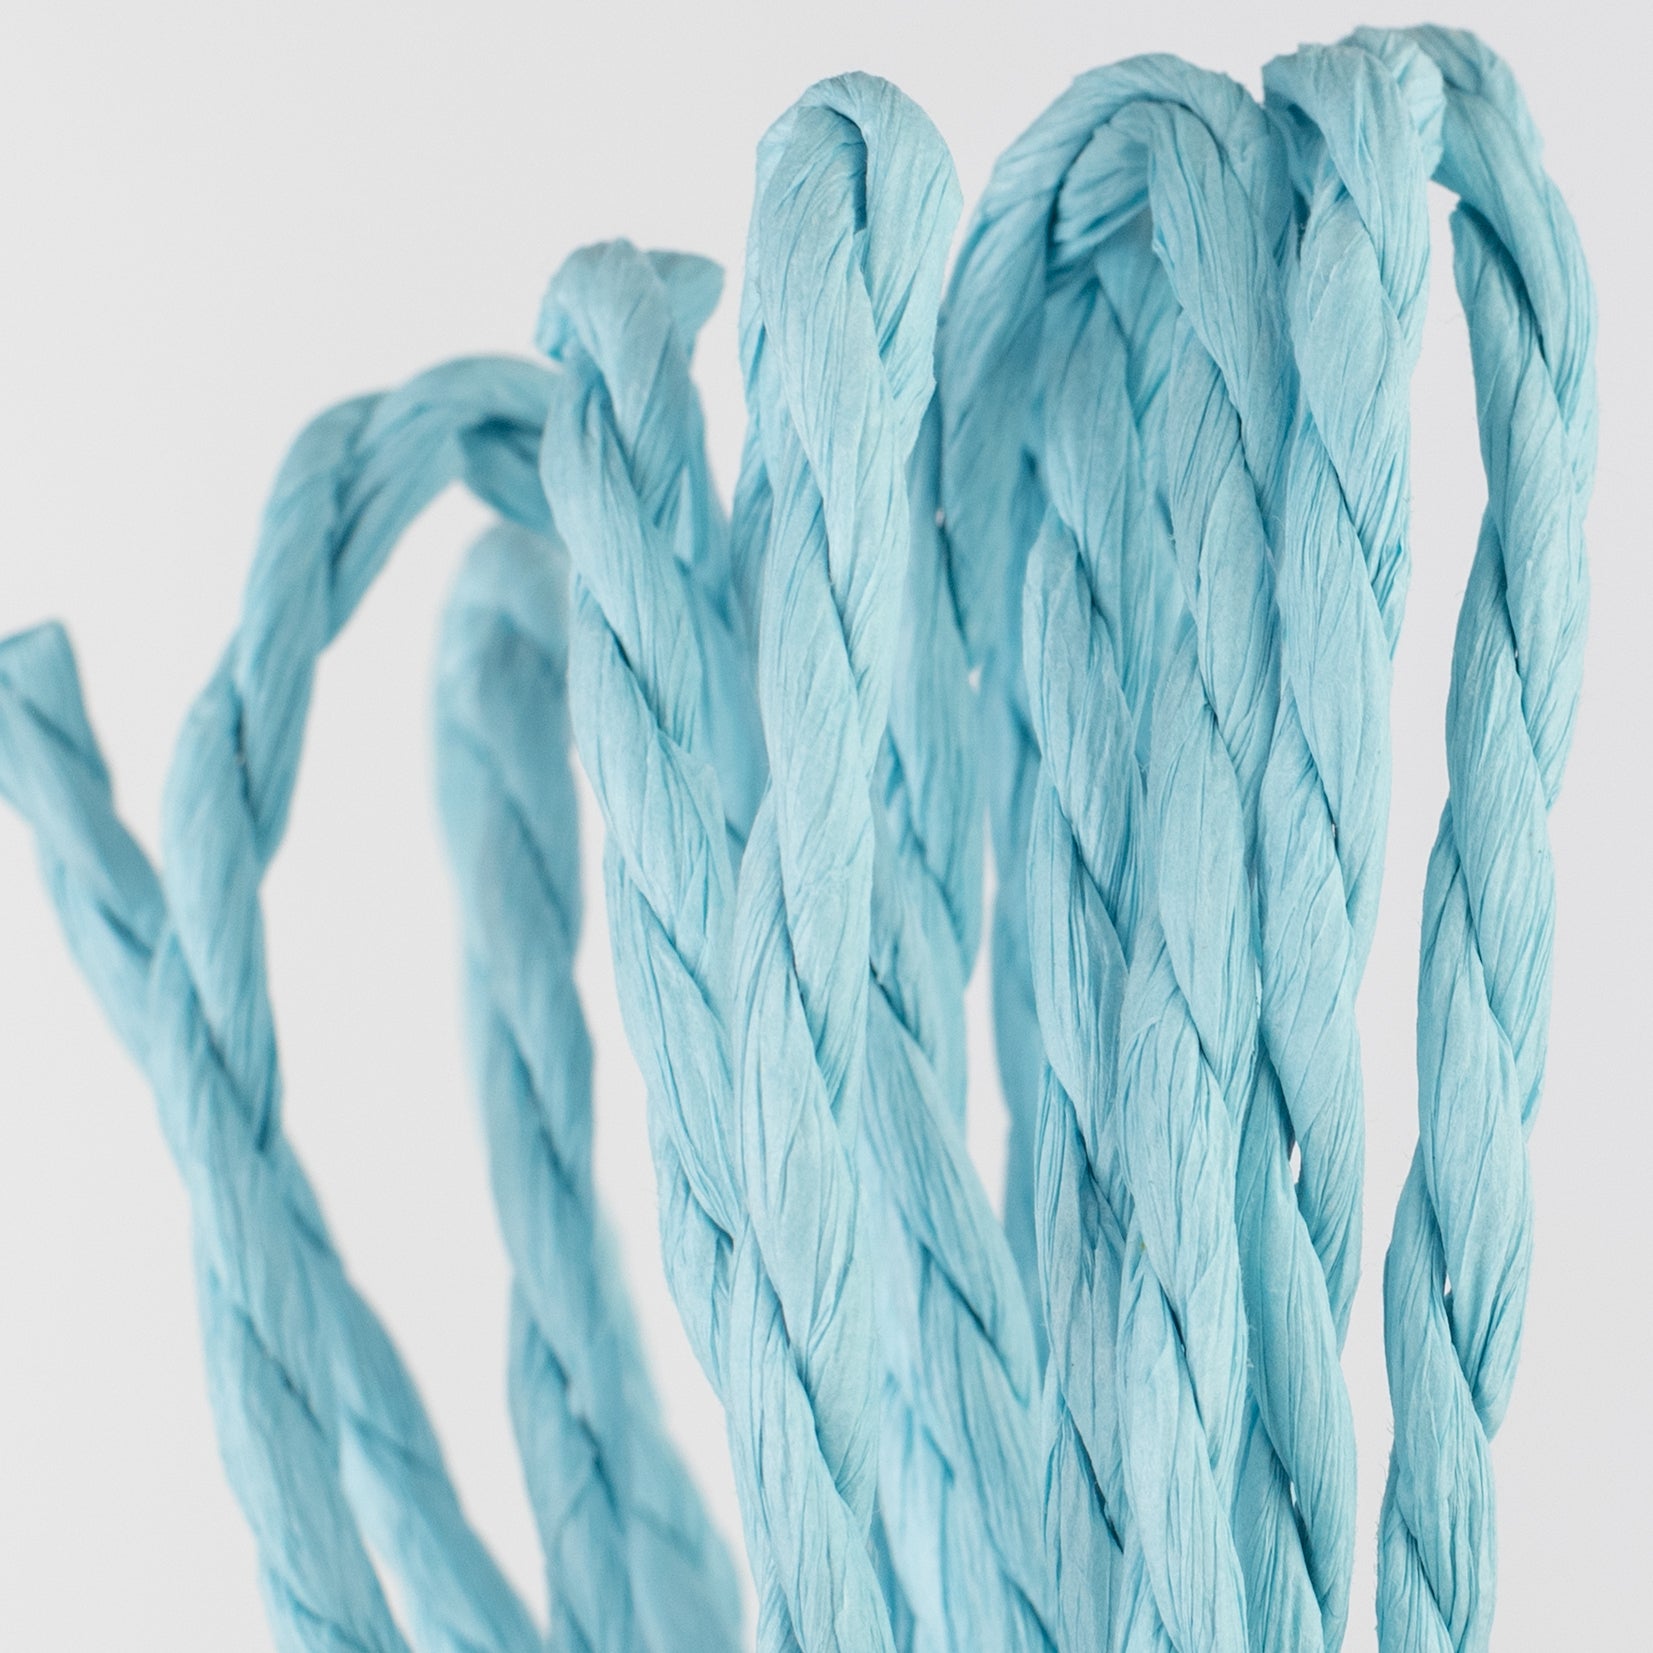 16' Paper Rope Bundle: Light Blue